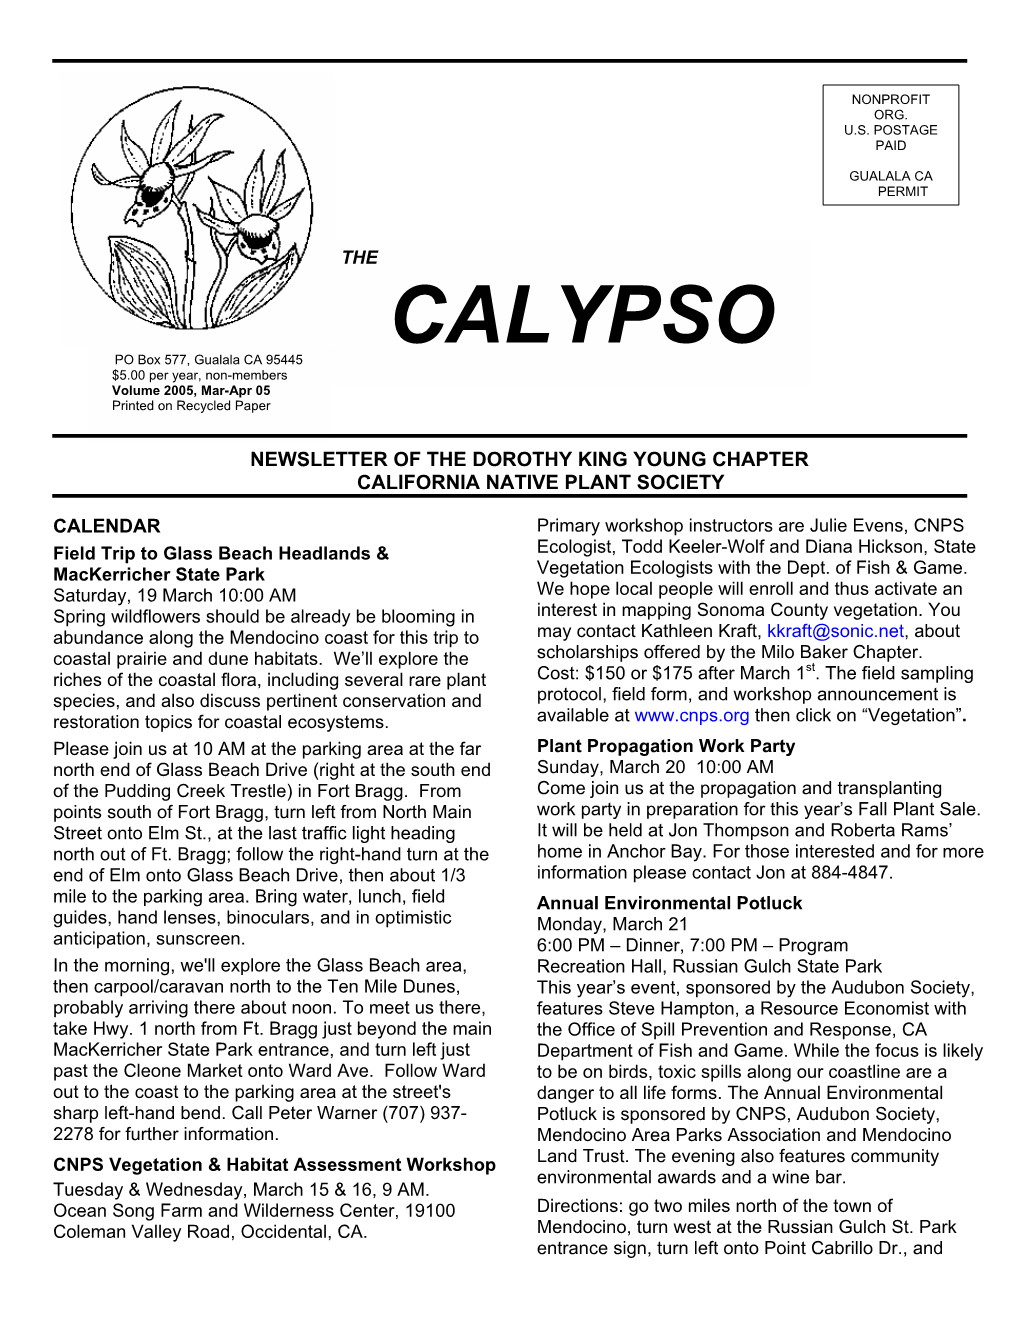 CALYPSO PO Box 577, Gualala CA 95445 $5.00 Per Year, Non-Members Volume 2005, Mar-Apr 05 Printed Onne Recycled Paper